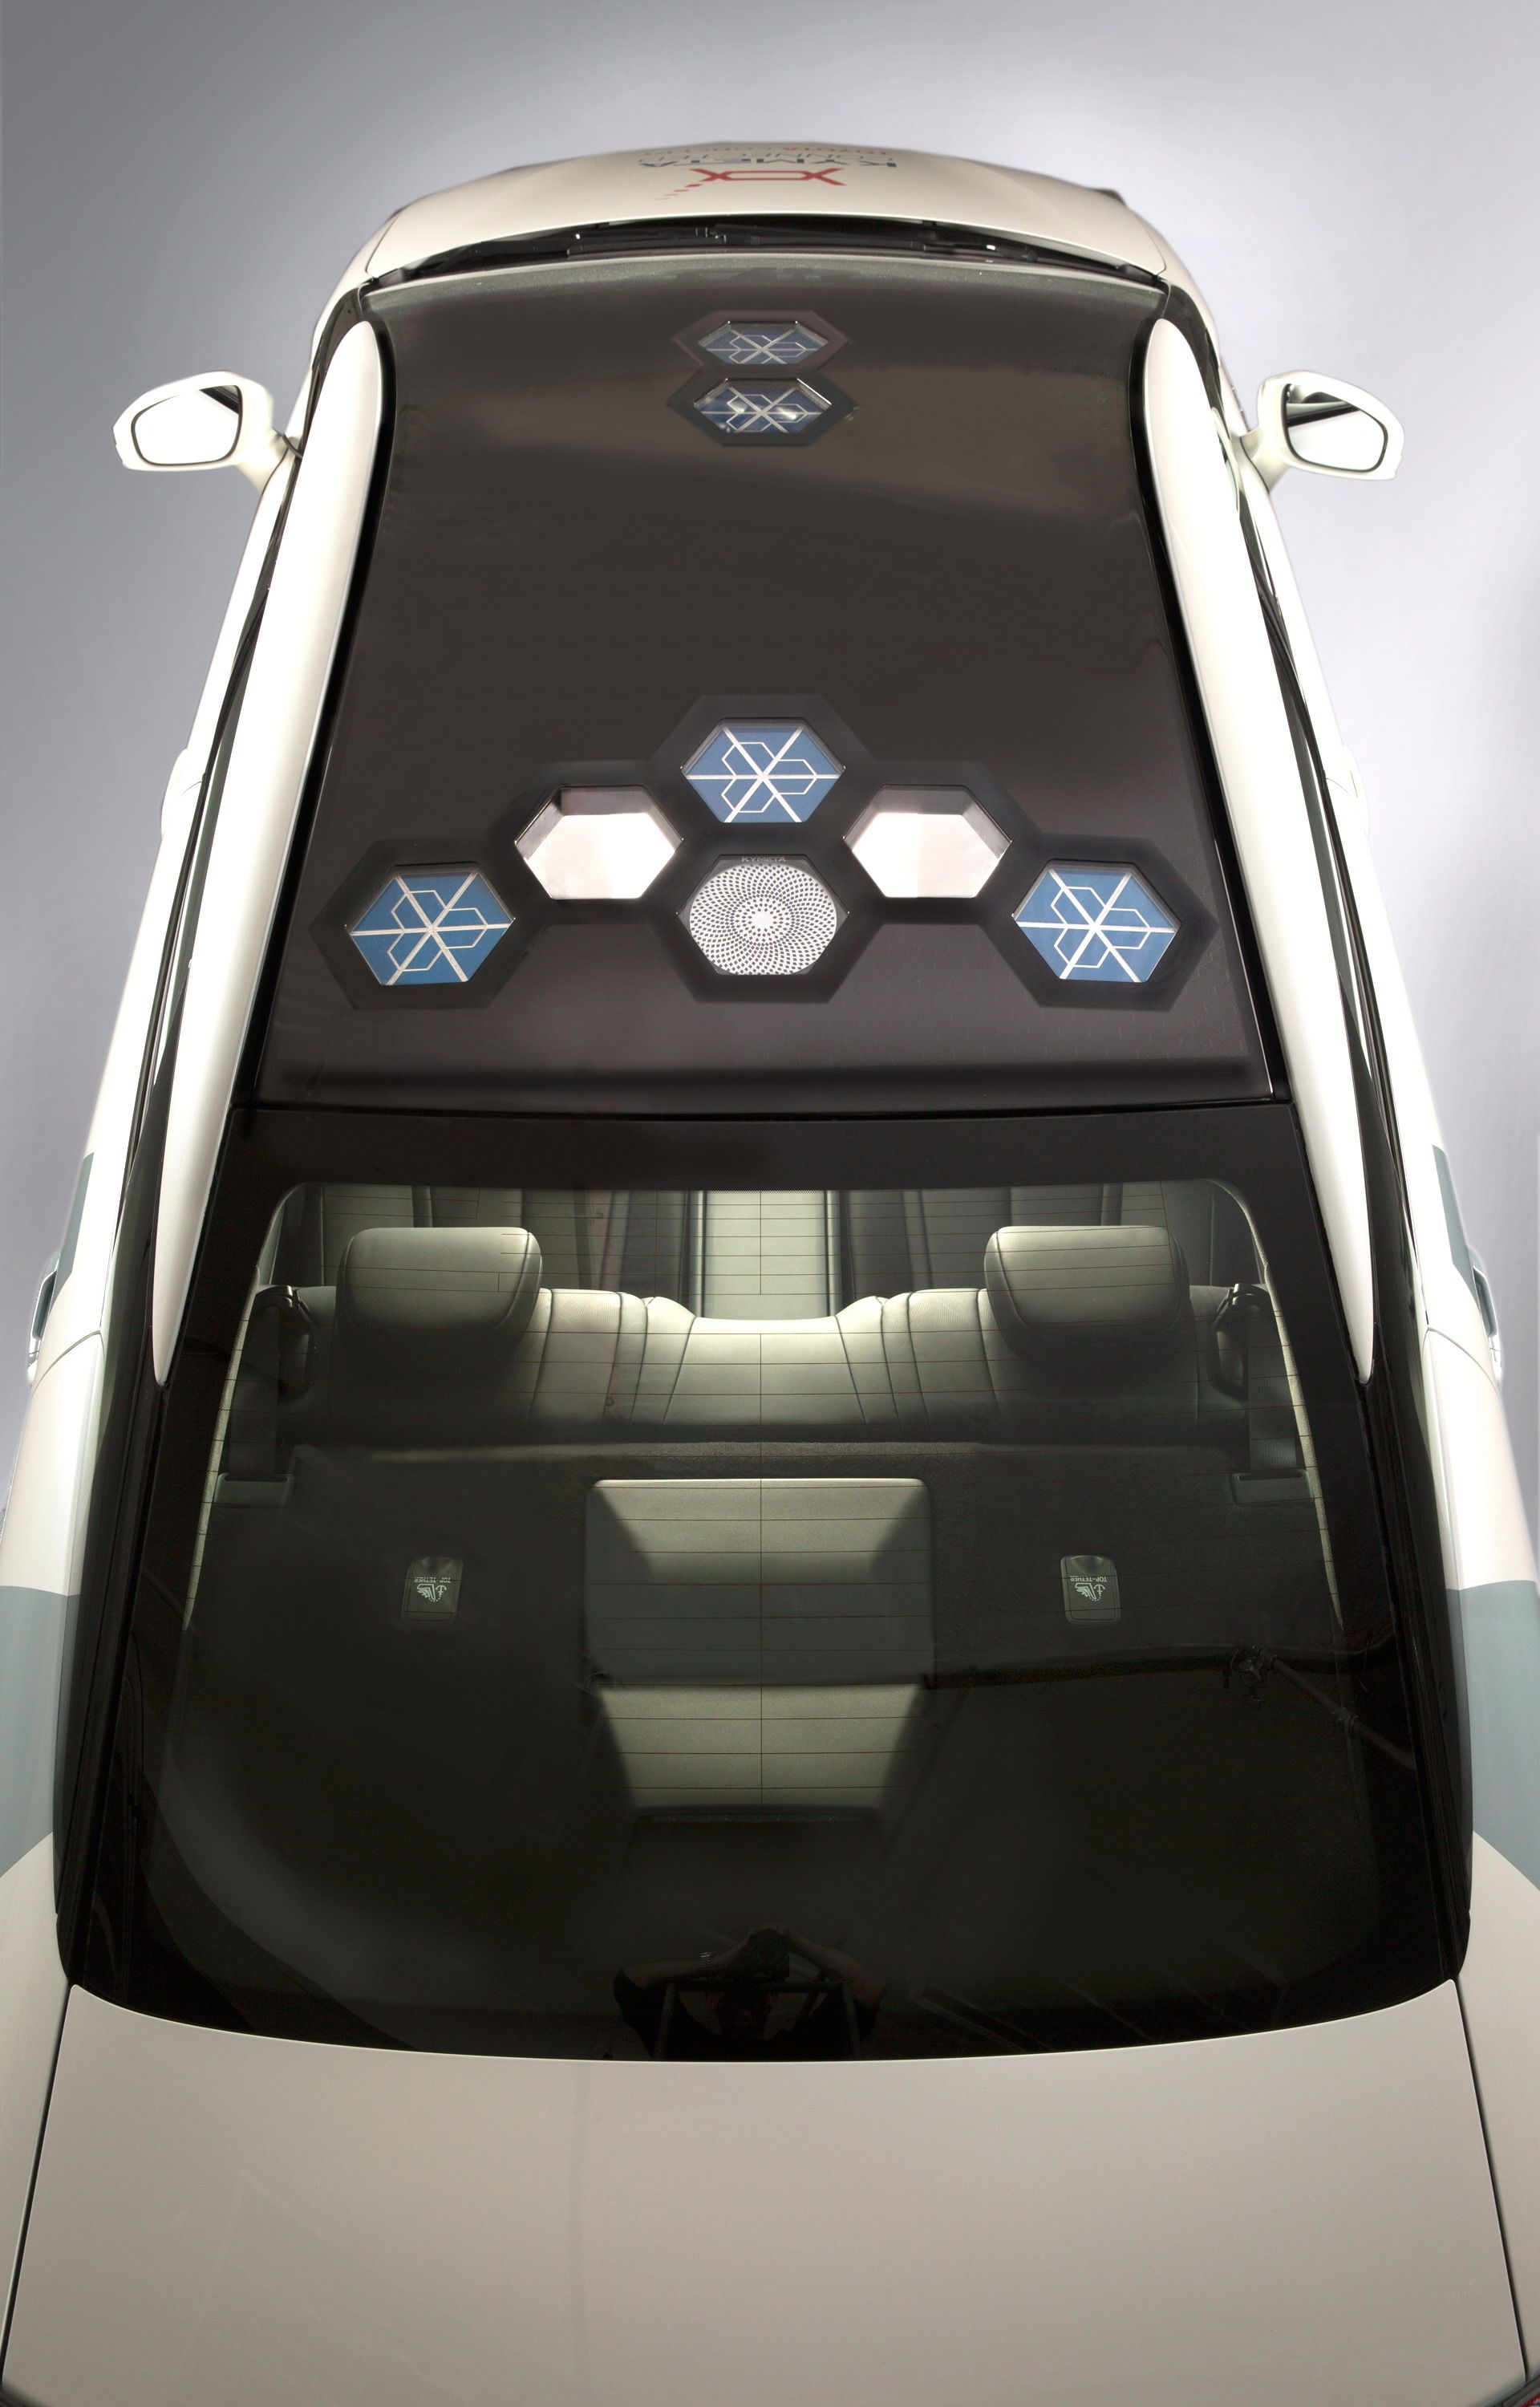 2016 Toyota Mirai-based Kymeta Research Vehicle